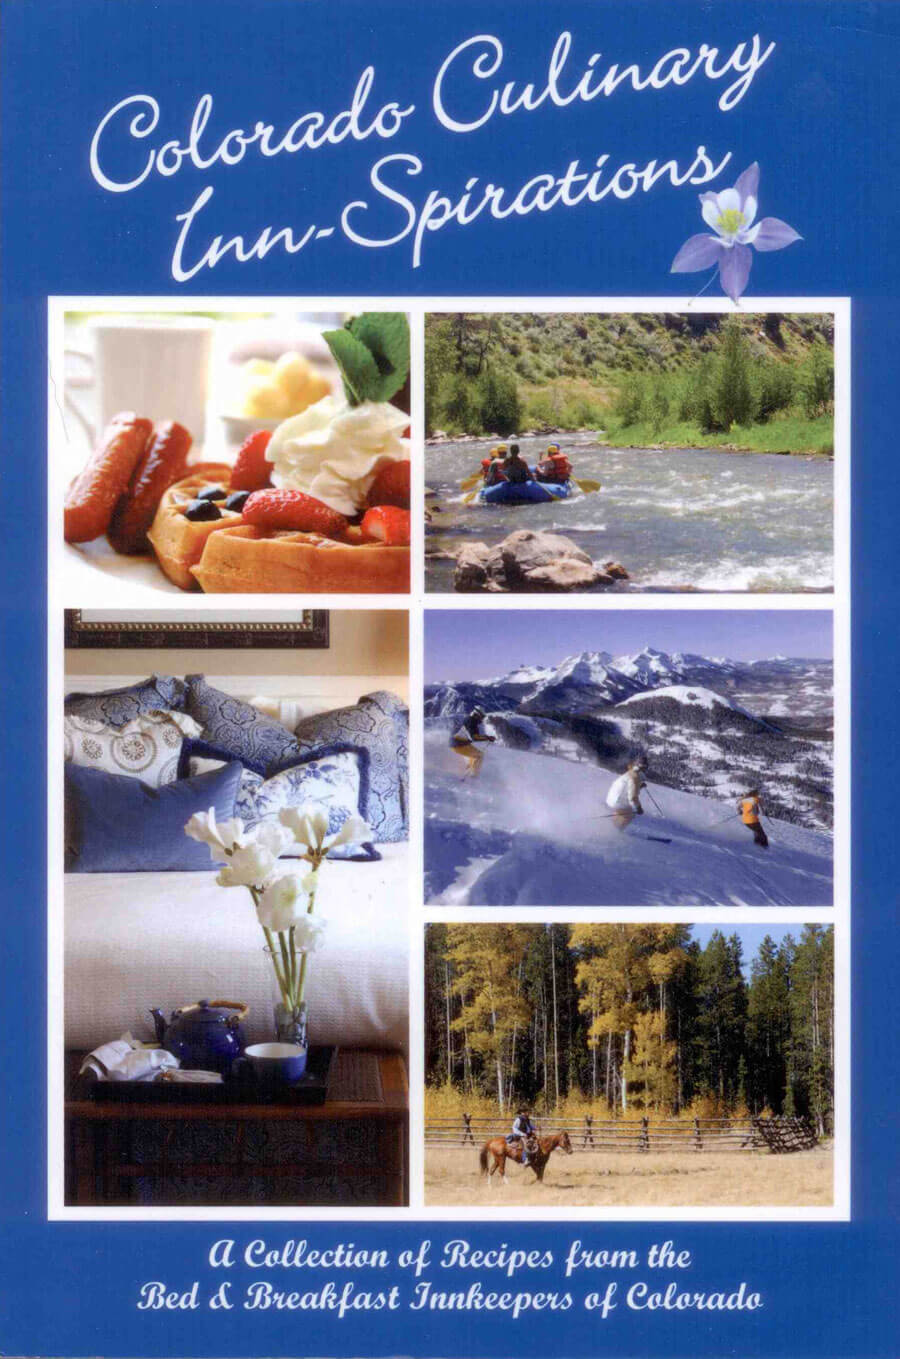 Cookbook - Bed & breakfasts & inns of Colorado Association